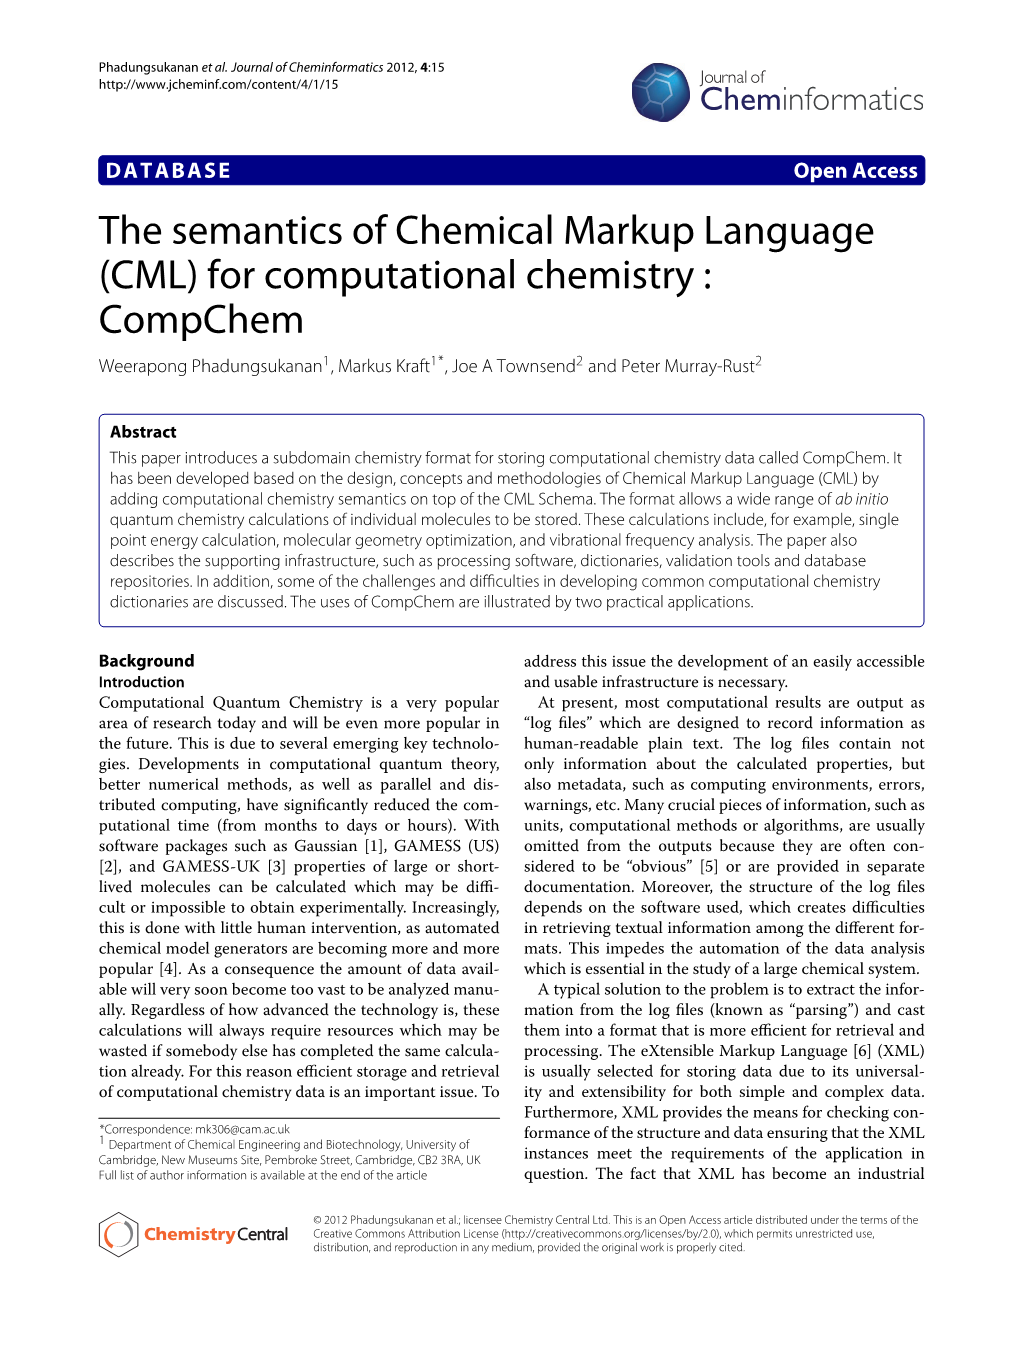 For Computational Chemistry : Compchem Weerapong Phadungsukanan1, Markus Kraft1*, Joe a Townsend2 and Peter Murray-Rust2